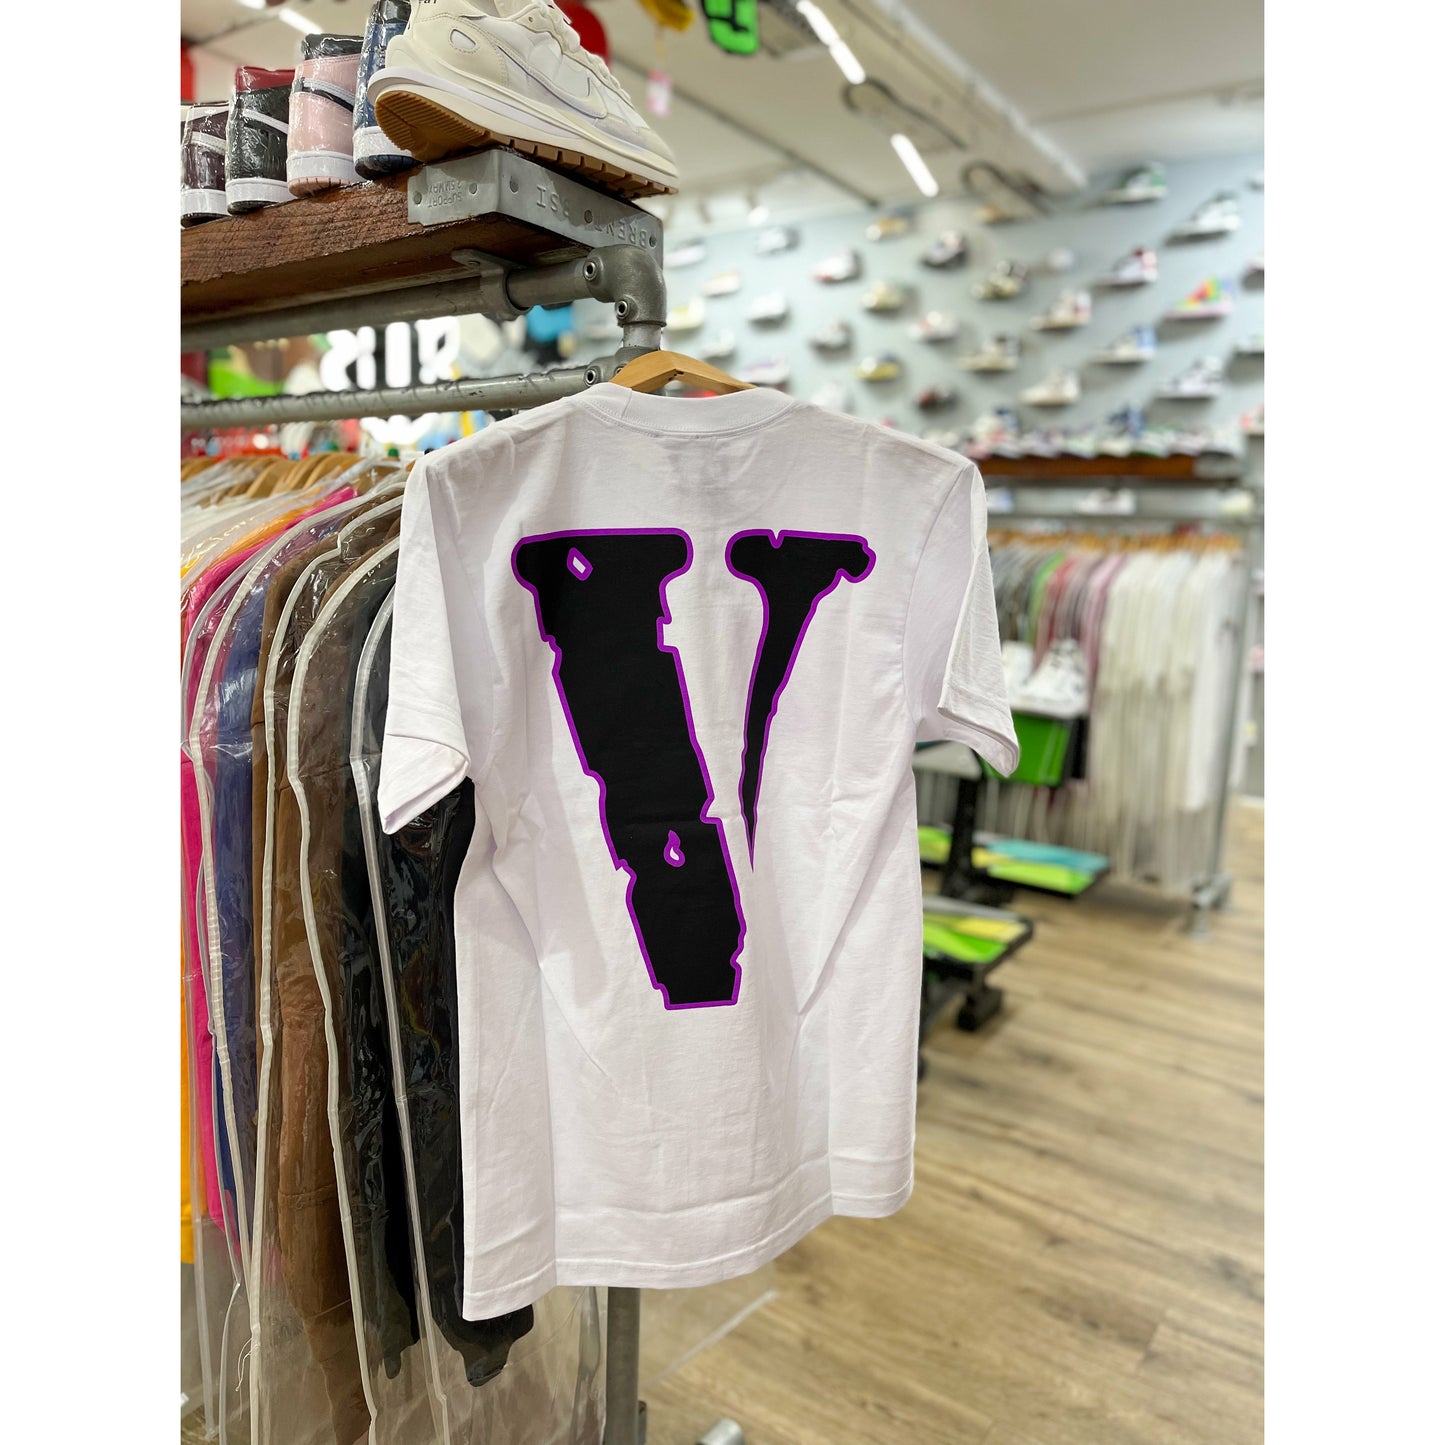 Juice Wrld x Vlone MOTY Man of the Year T-shirt White/Purple from Vlone